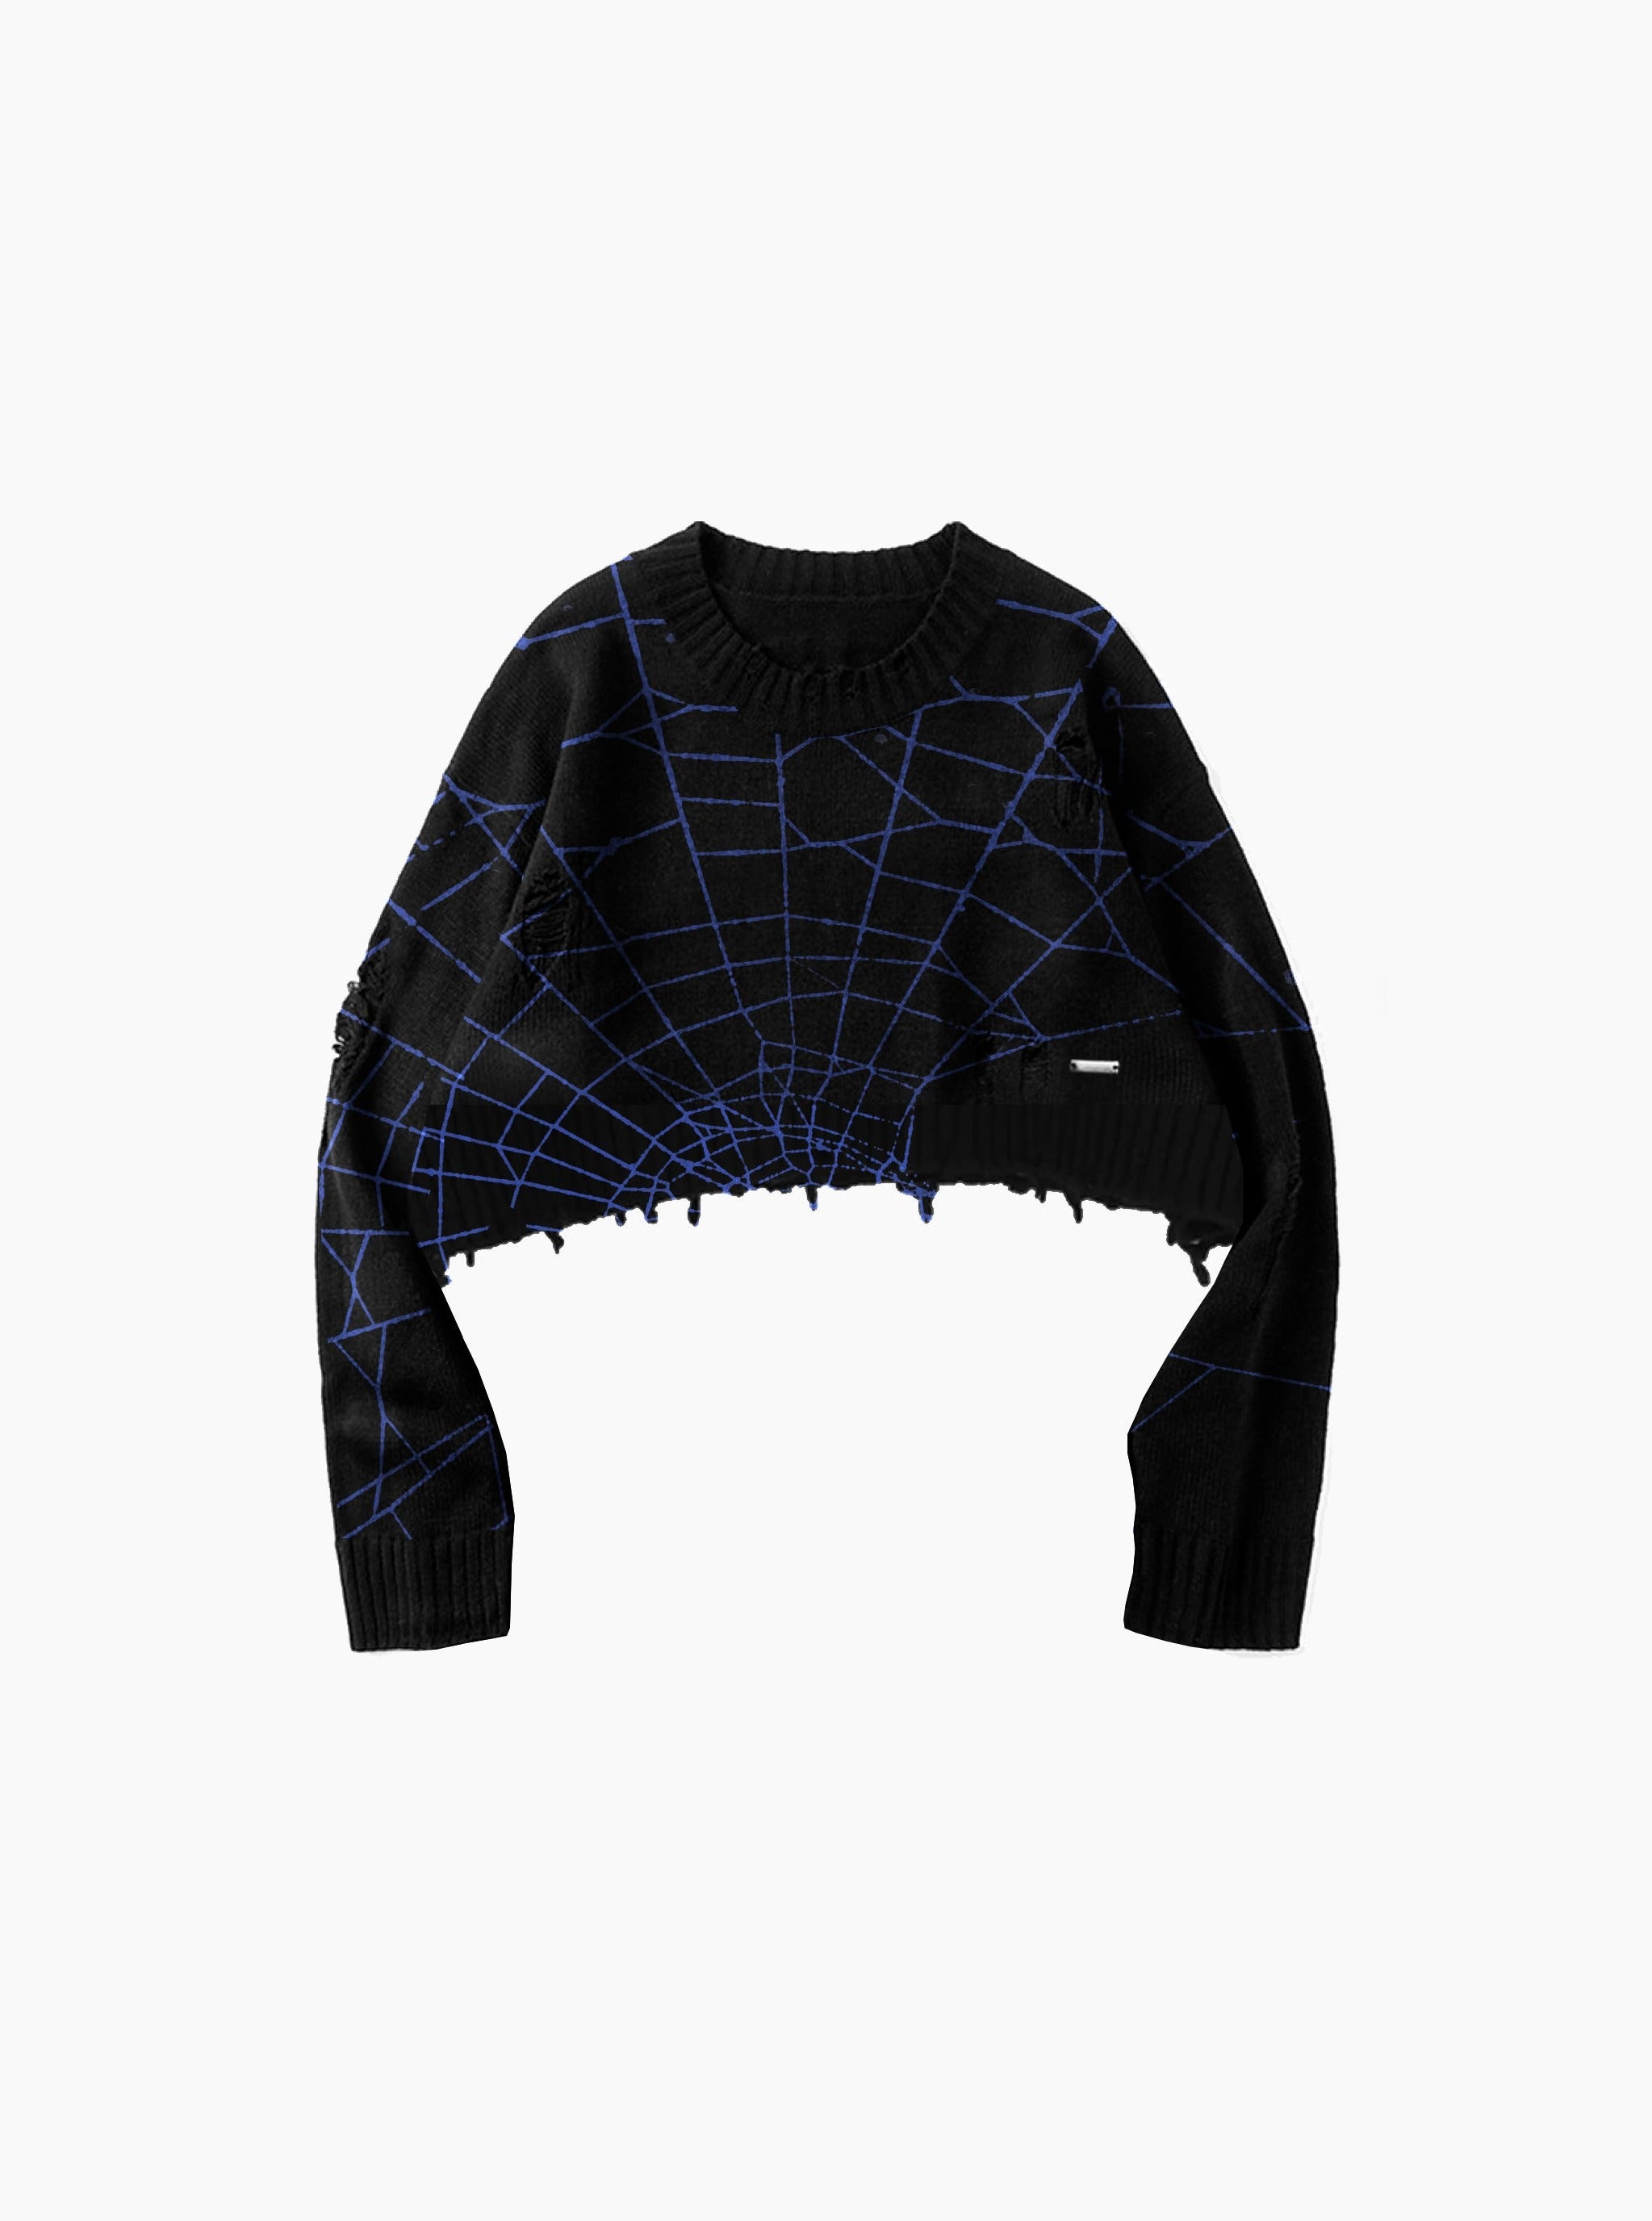 Sole et. Al Dark Web Distressed Knit Sweater för kvinnor